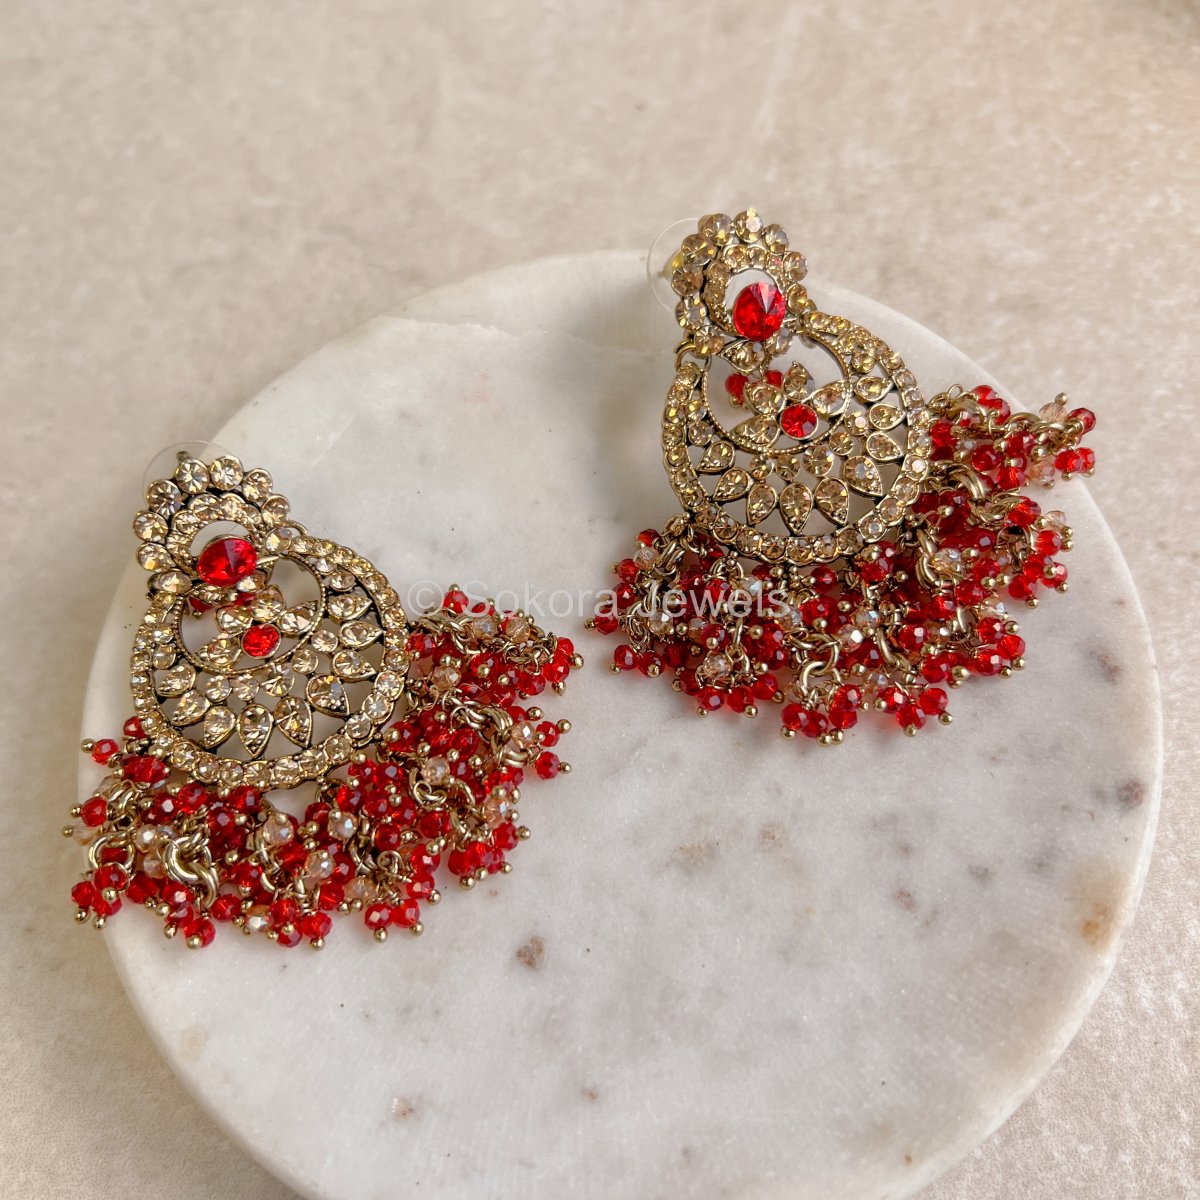 Amulya Small Earrings - Red - SOKORA JEWELSAmulya Small Earrings - Red